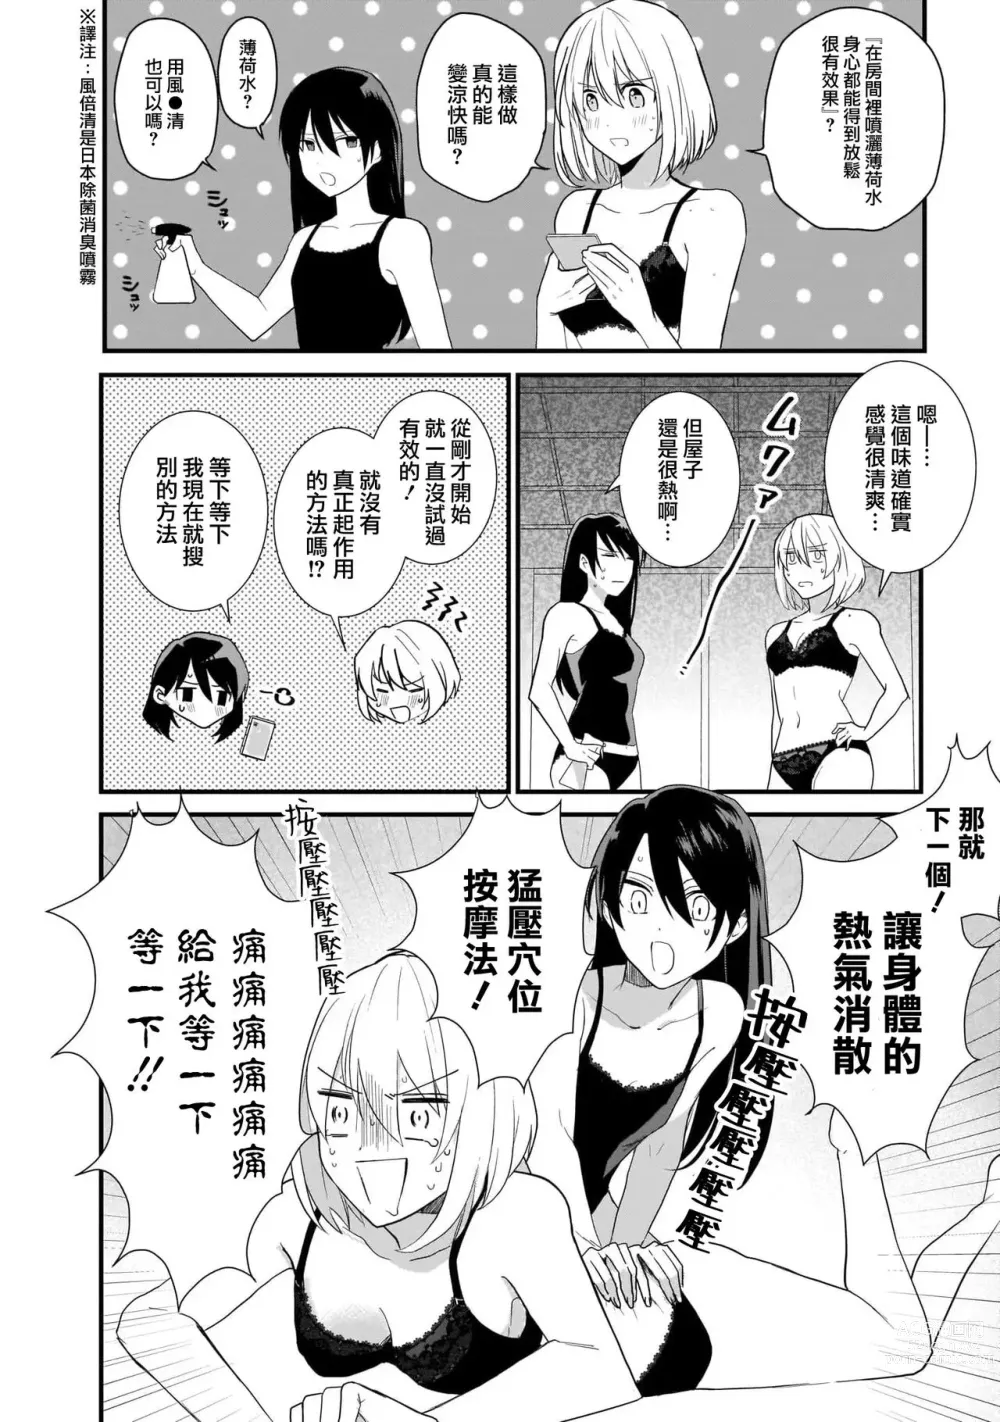 Page 5 of manga 冷却运动